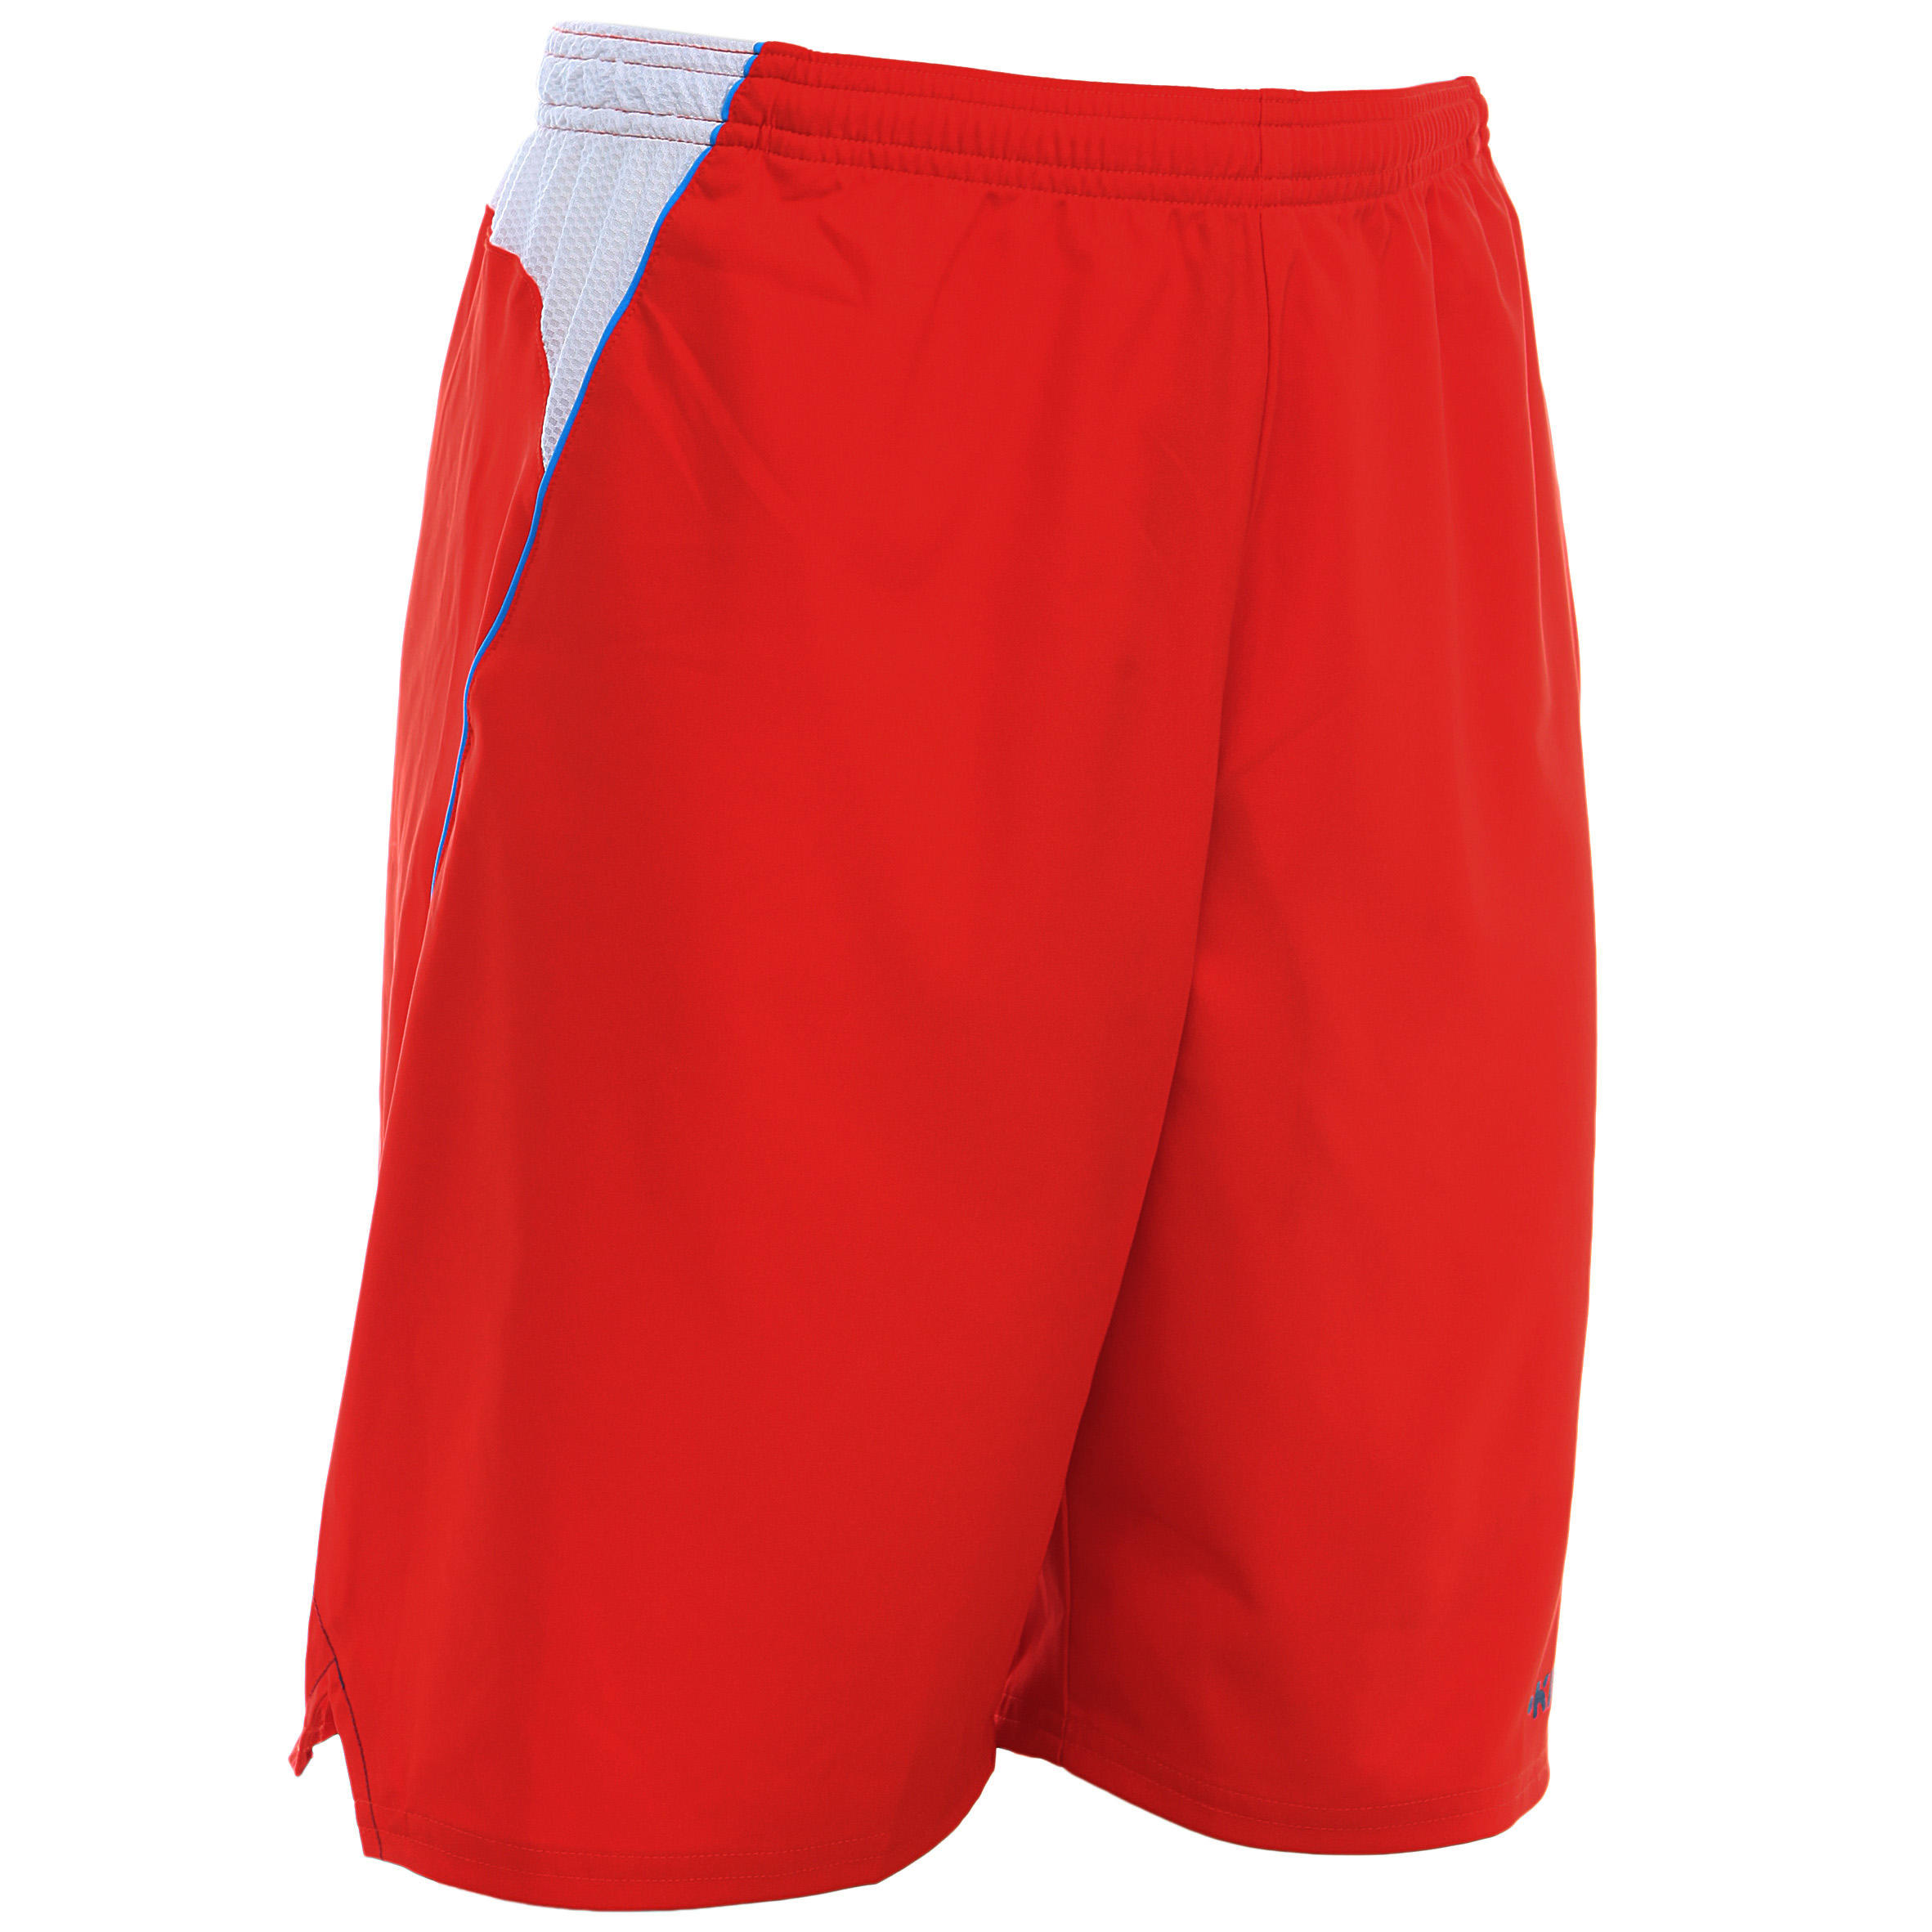 KIPSTA F500 Adult Football Shorts - Red